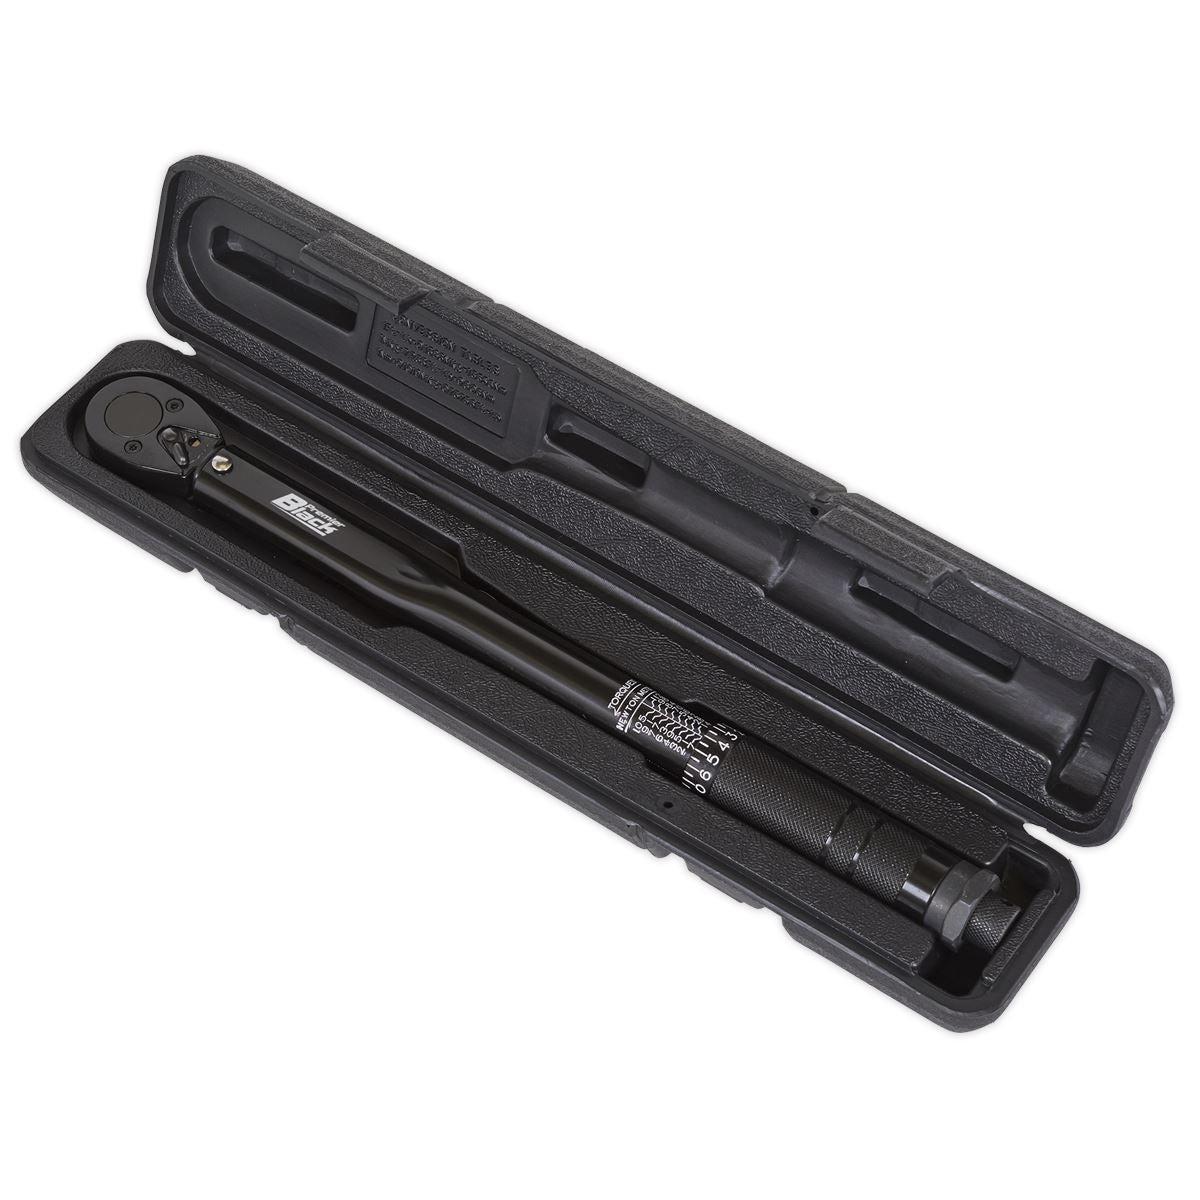 Sealey Premier Black Micrometer Torque Wrench 3/8"Sq Drive Calibrated Premier Black